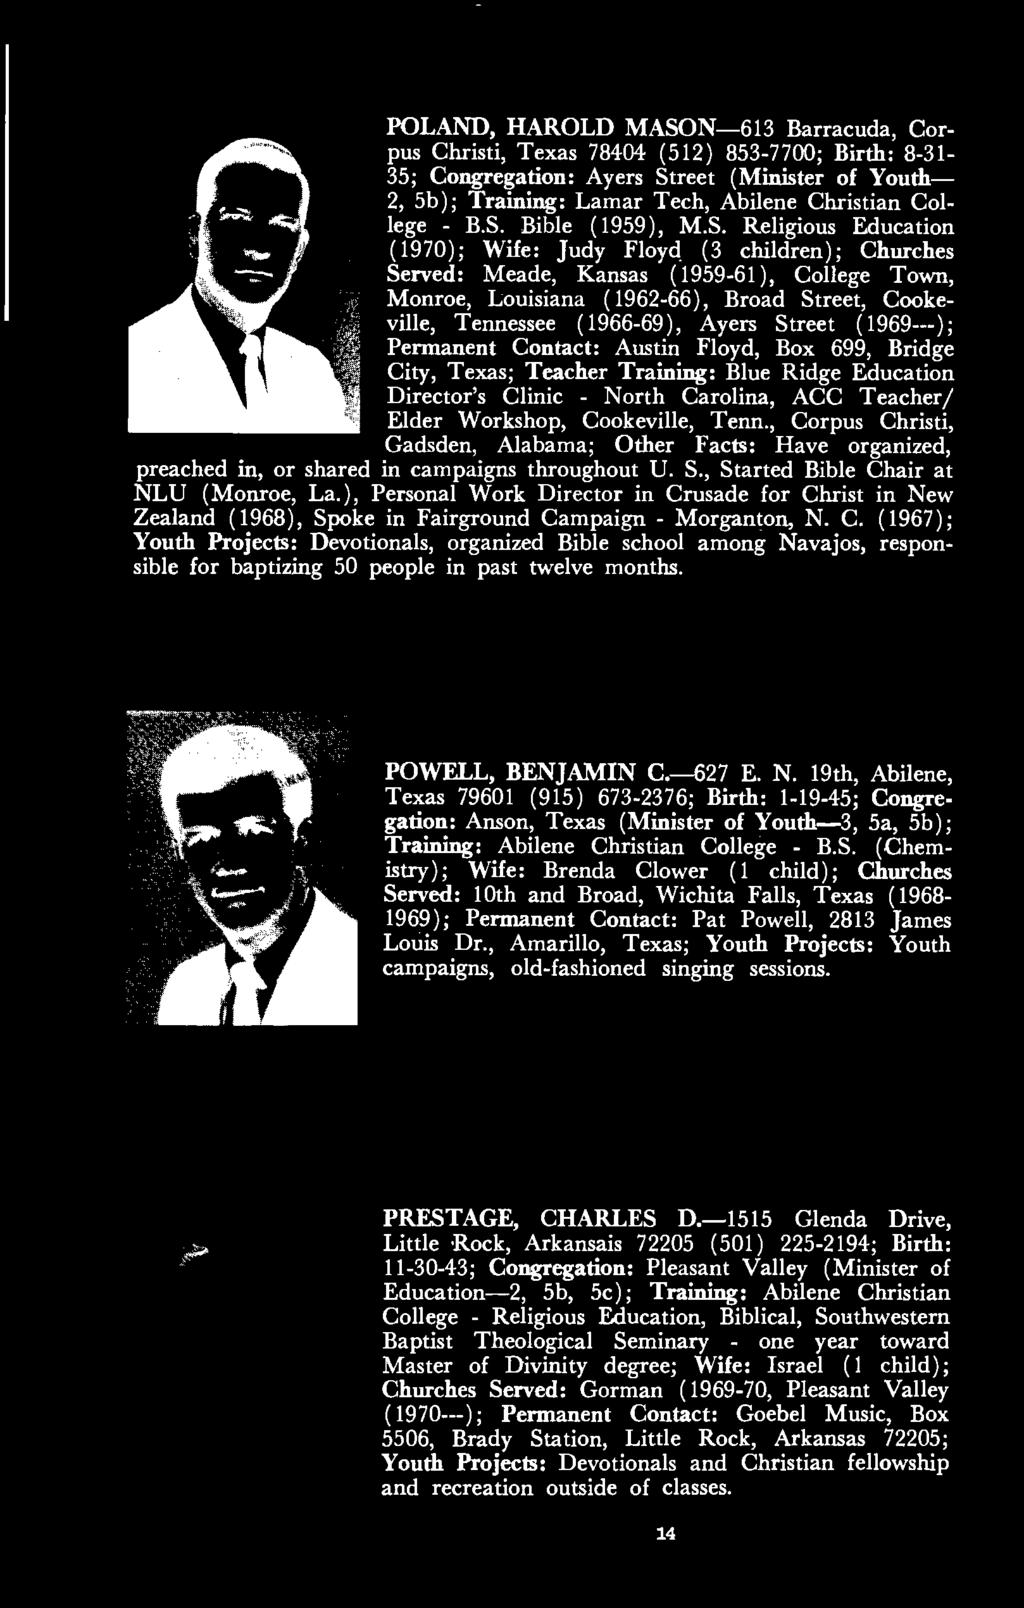 1966-69 ), Ayers Street ( 1969---); Permanent Contact: Austin Floyd, Box 699, Brid ge City, Texas ; Teacher Training: Blue Rid ge Educat ion Dir ector's Clinic - North Caro lina, ACC Teach er/ Elder